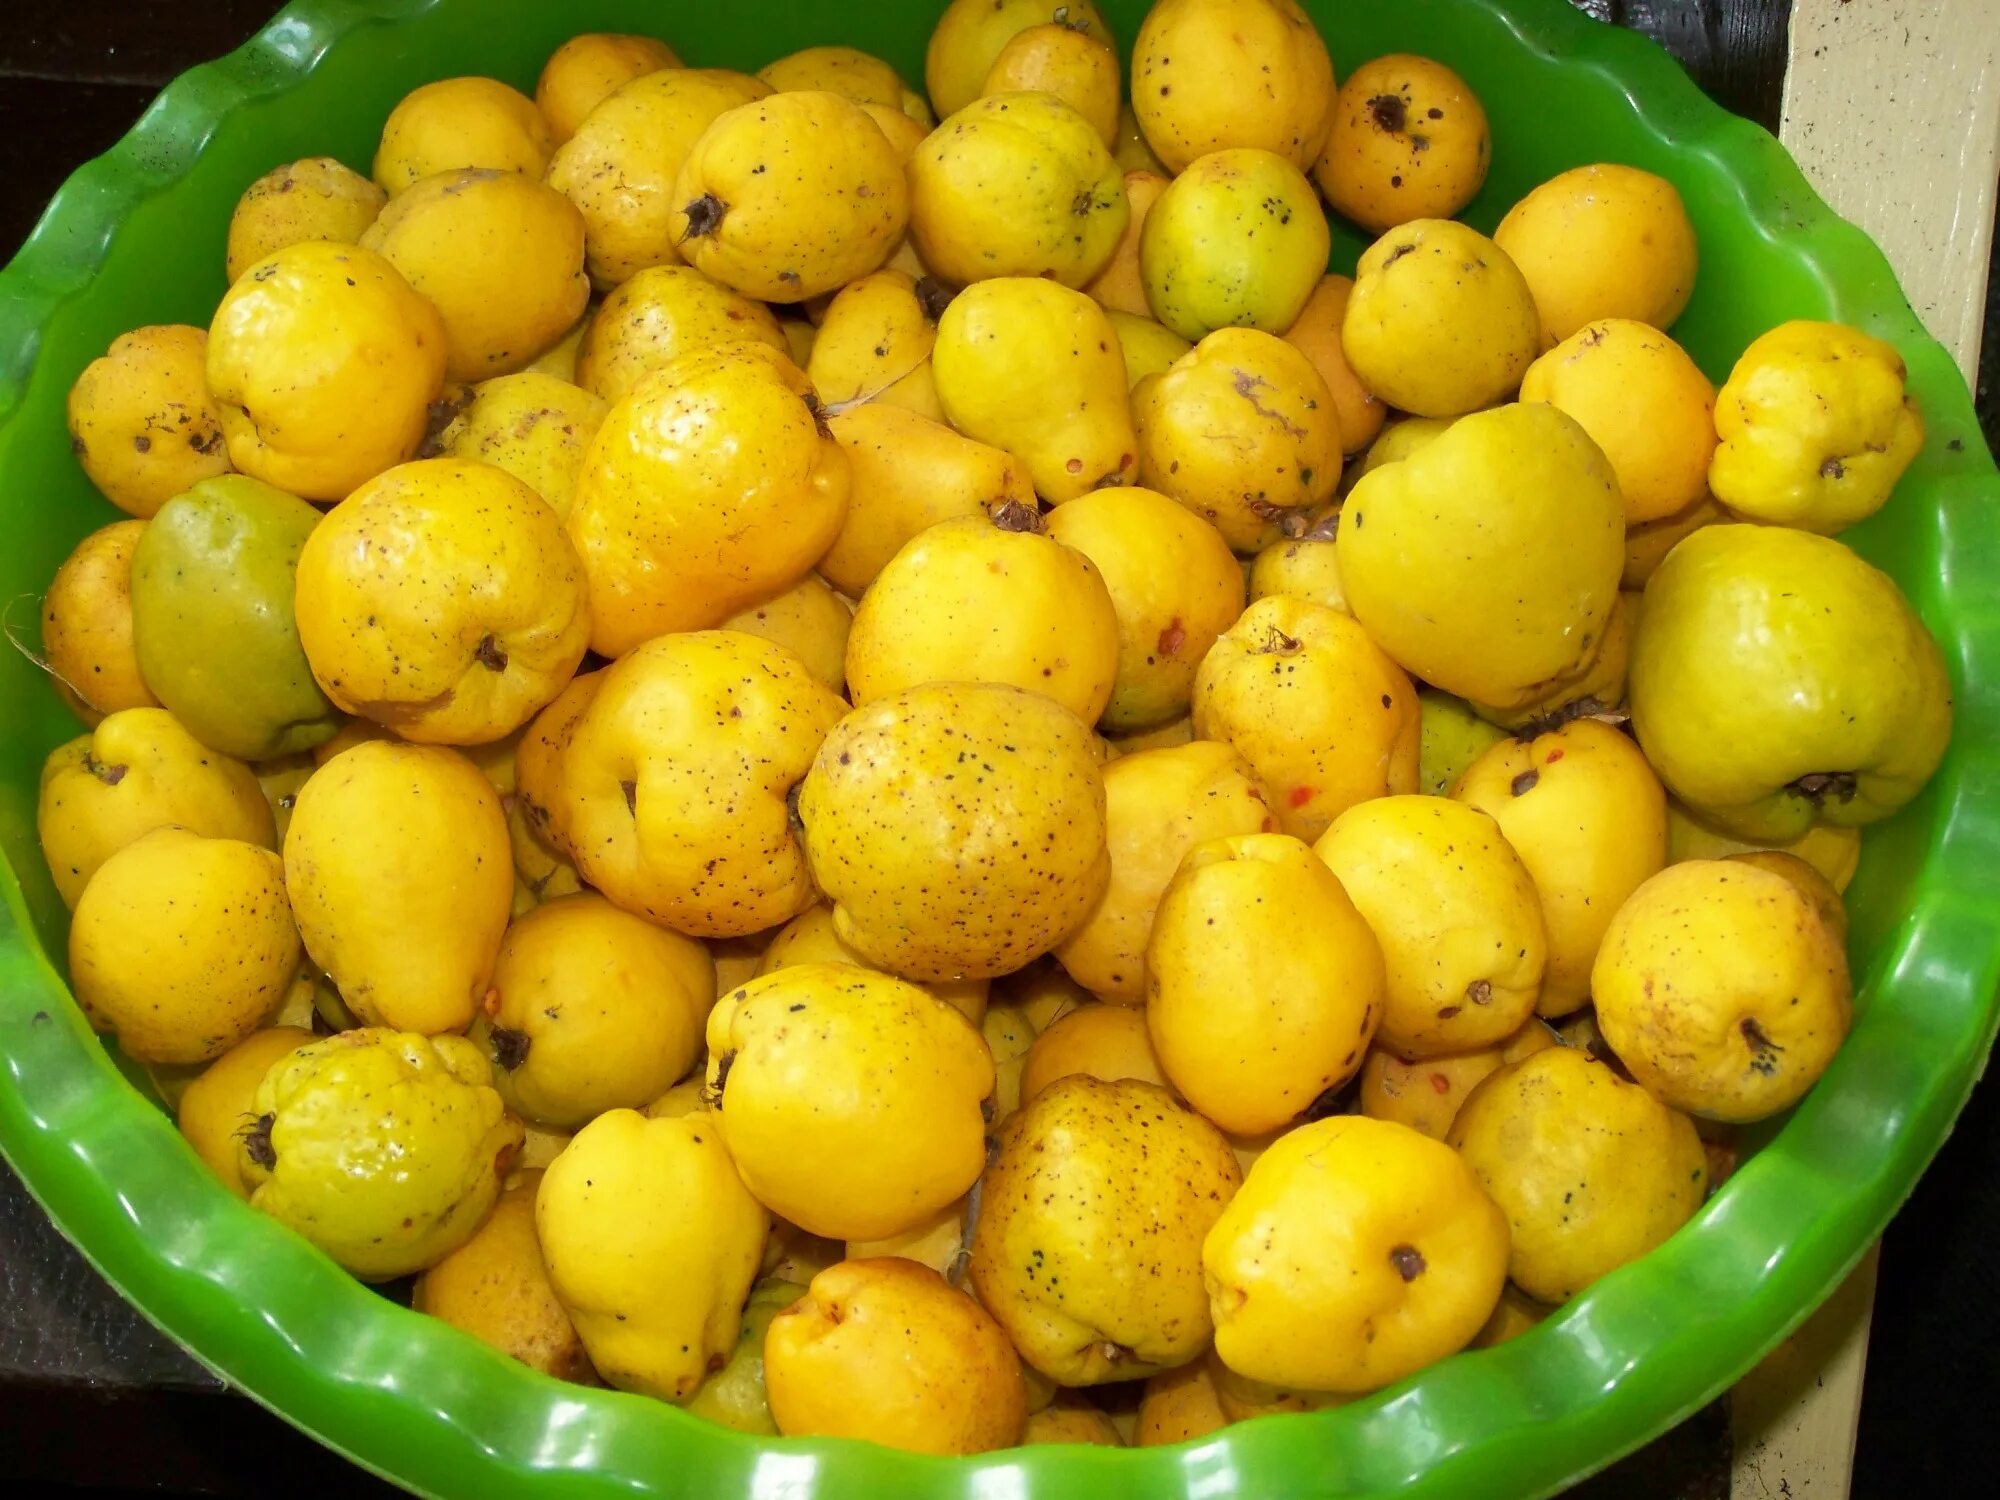 Айва хеномелес плоды. Лимонная айва хеномелес. Айва японская лимонник. Зубутлинская айва. Айва японская плоды